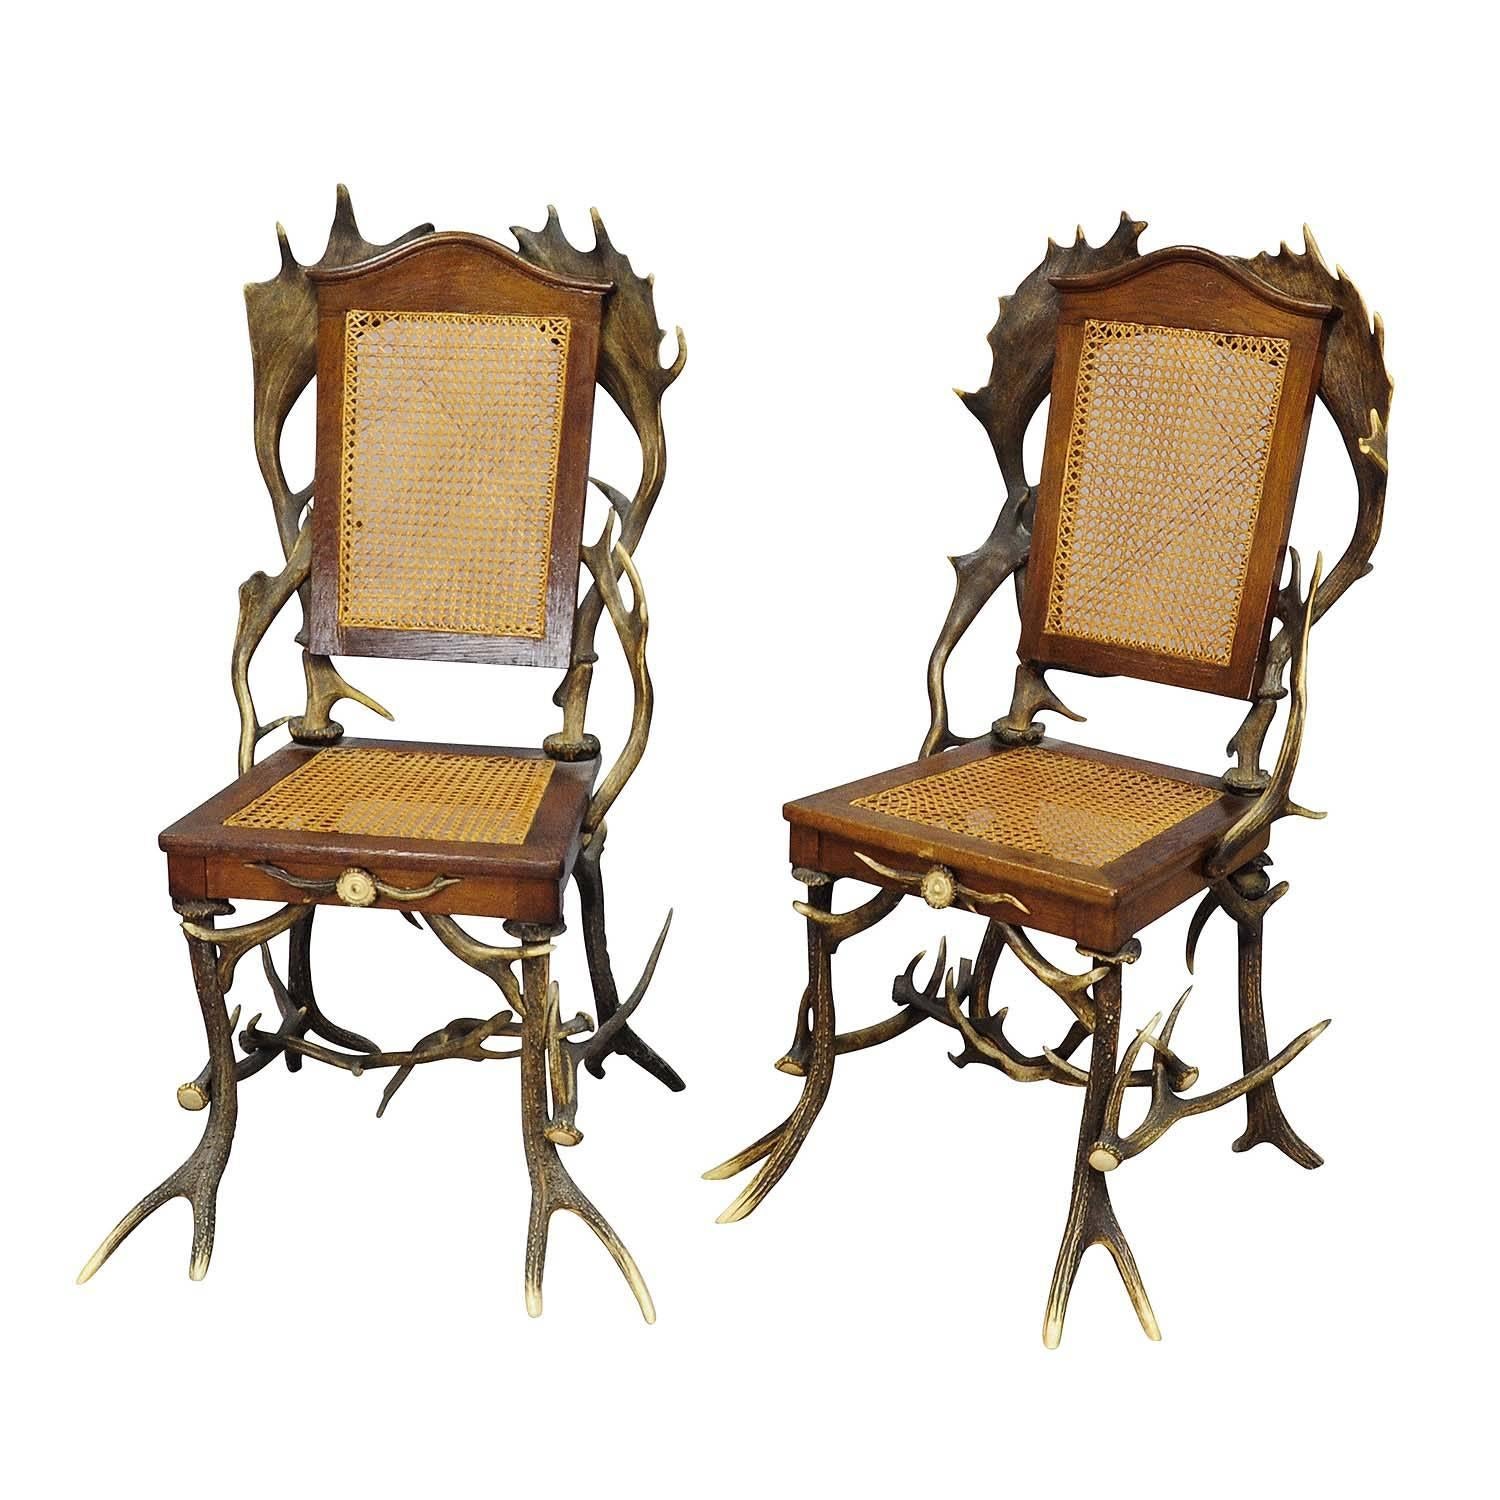 Pair Antique Rustic Cabin Chairs, circa 1900